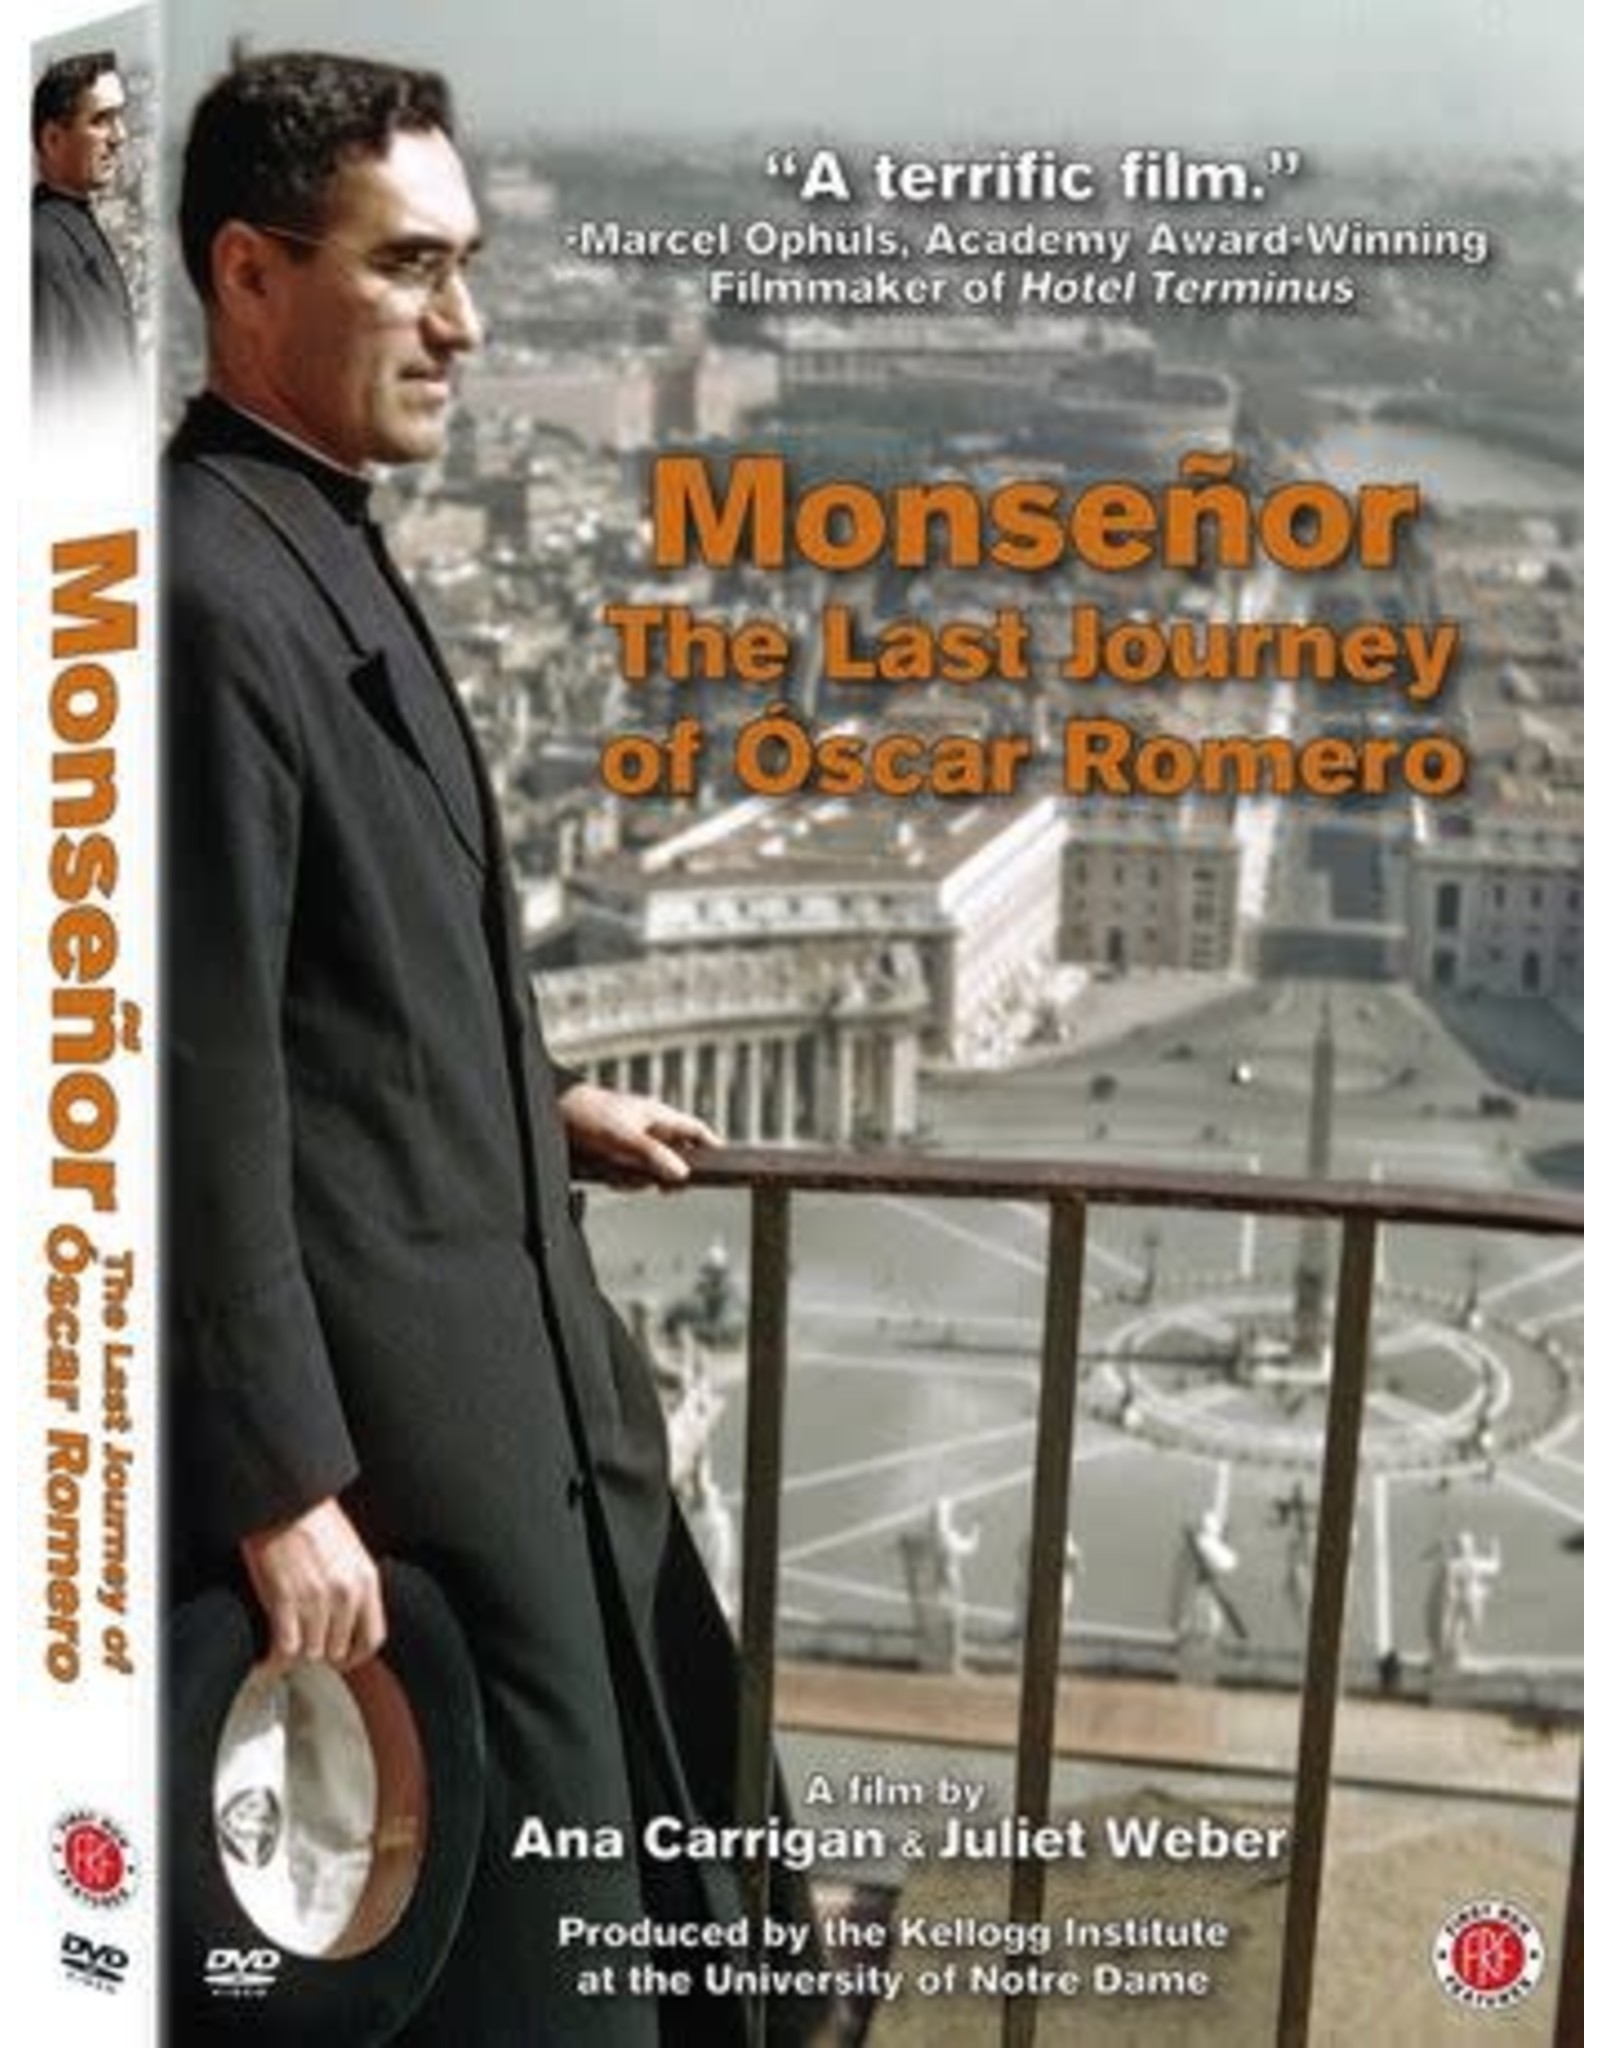 Ave Maria Press Monsenor: The Last Journey of Oscar Romero (DVD)